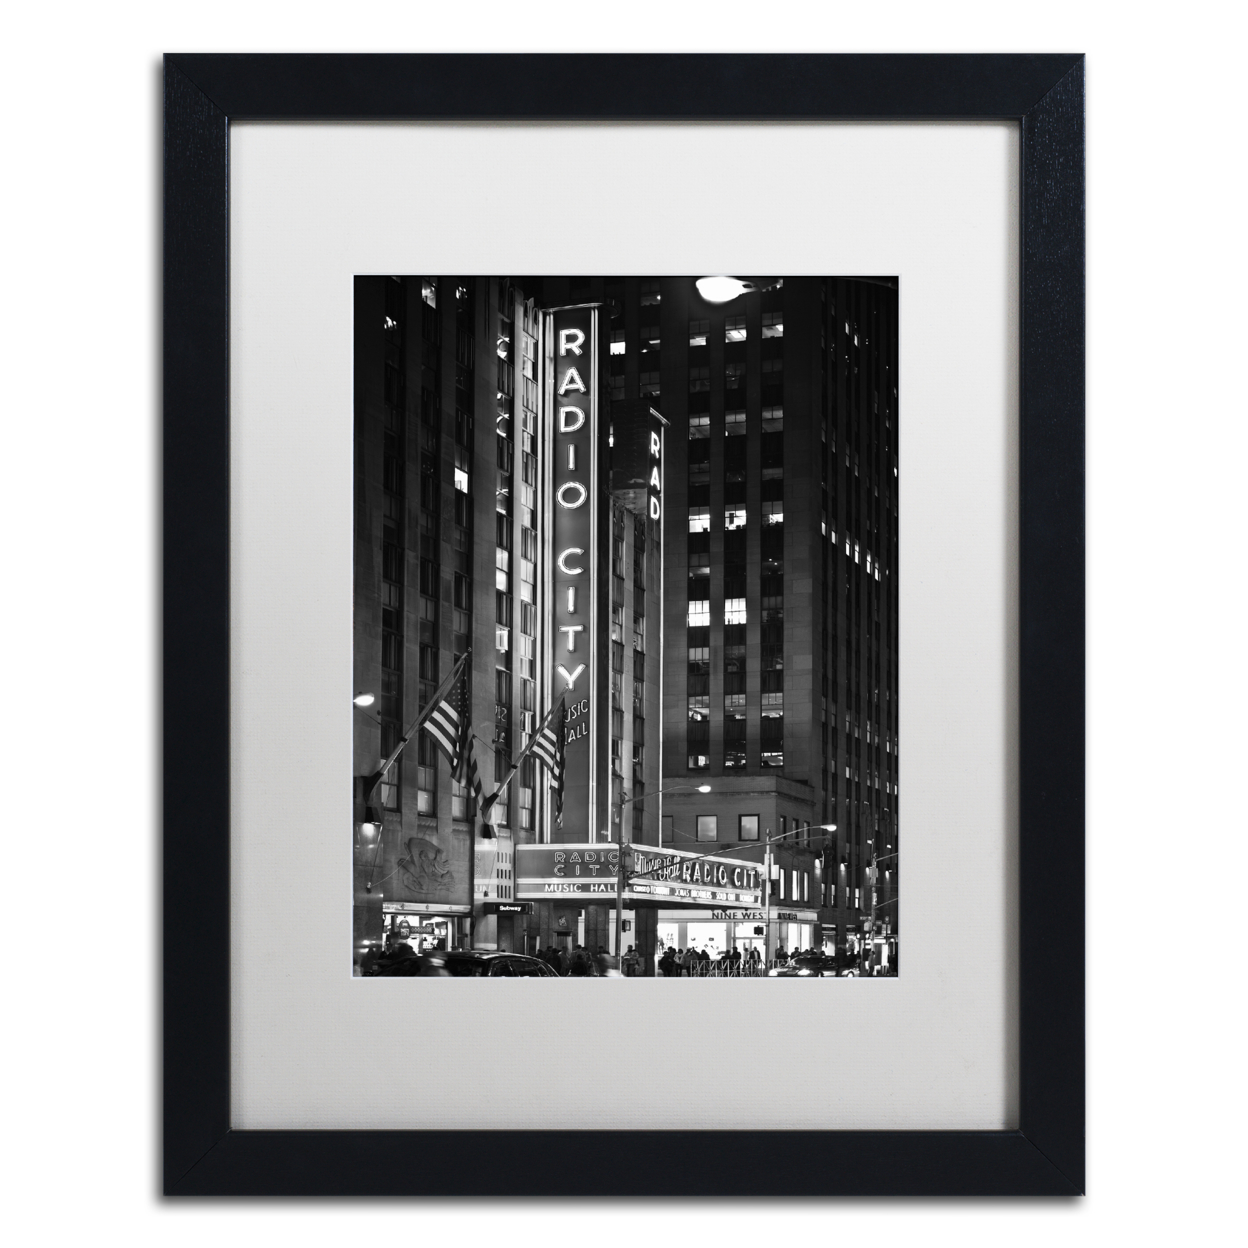 Philippe Hugonnard 'Radio City Music Hall' Black Wooden Framed Art 18 X 22 Inches